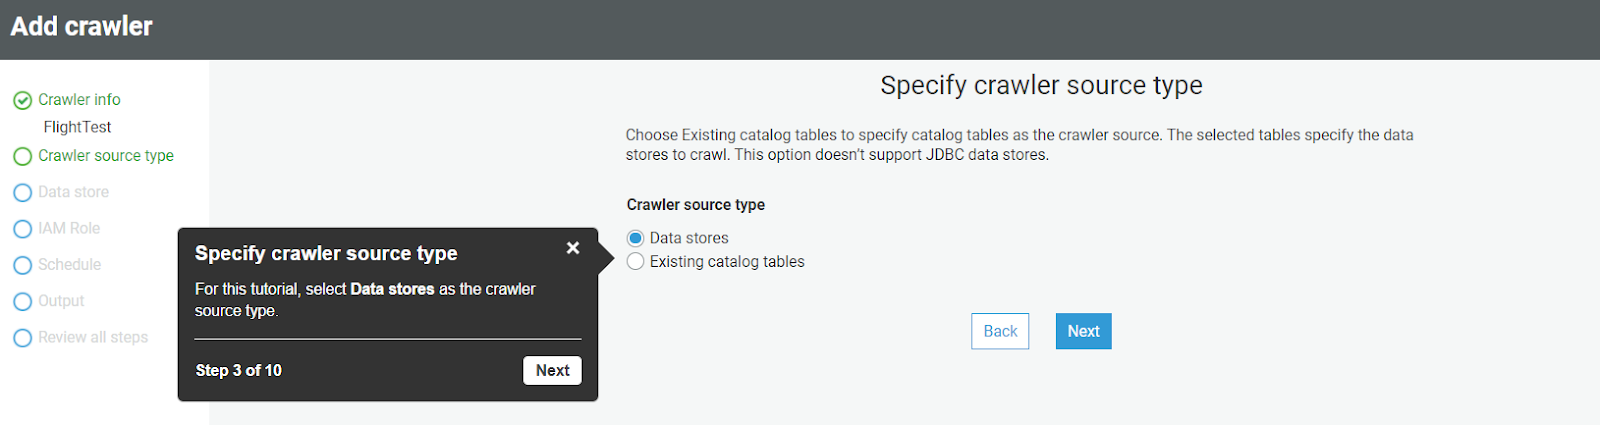 AWS Glue - specify crawler source type
